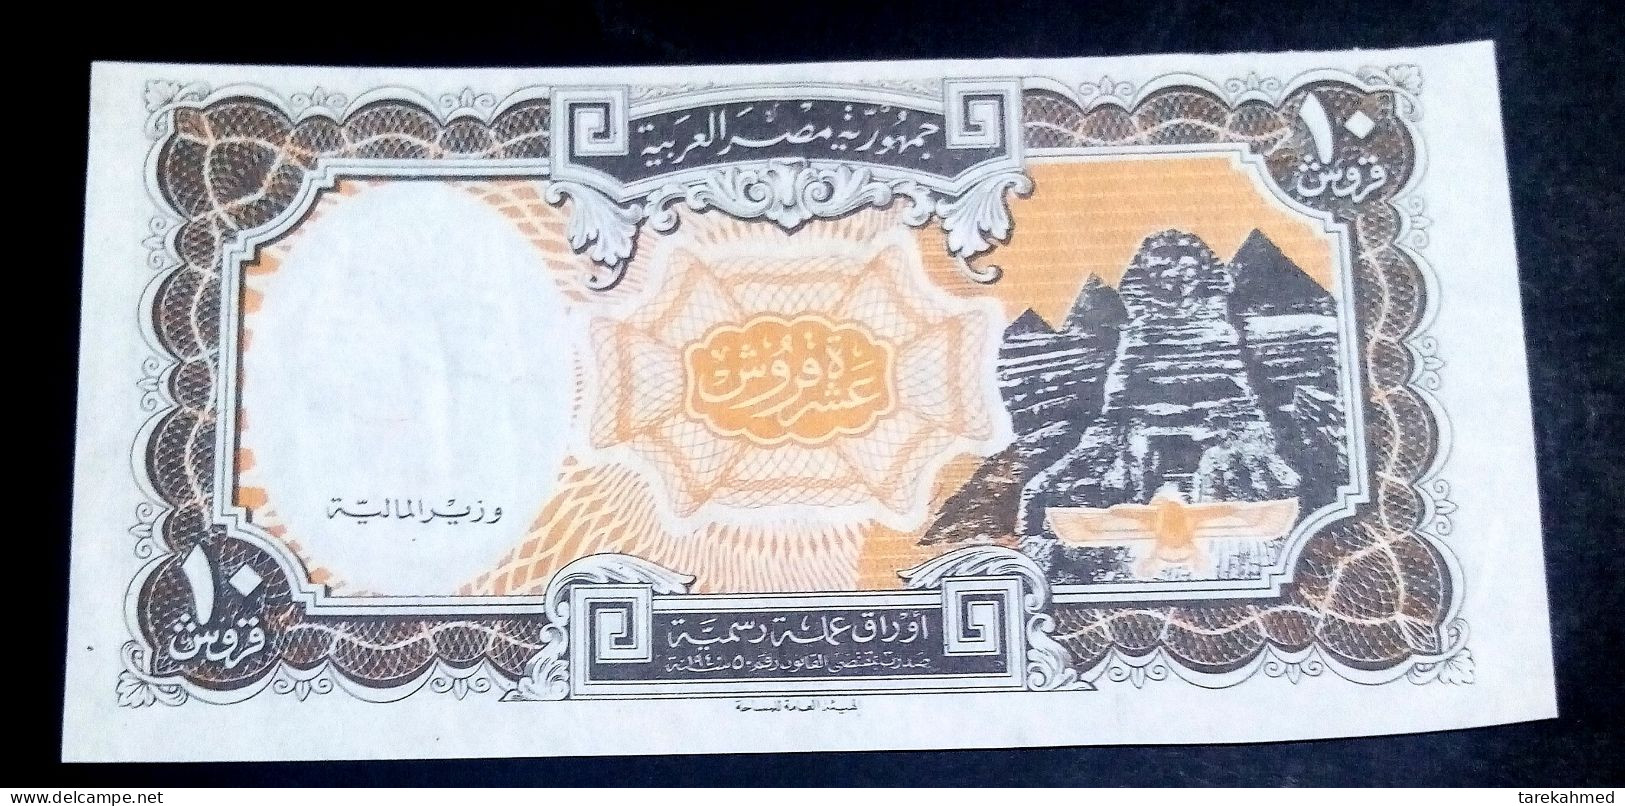 Egypt 1997, Rare Error 10 Piastres - No Arabic Signature No Serial Number  - UNC - Egypt